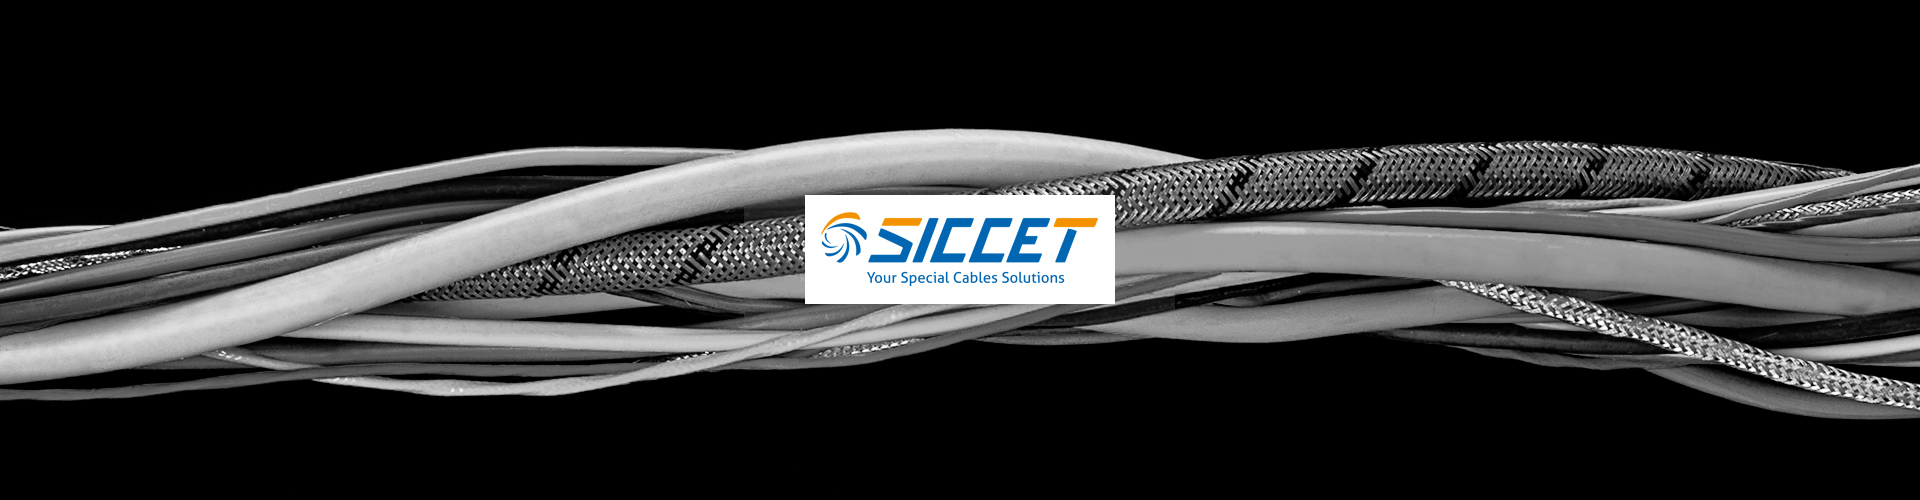 Logo Siccet kamet trading.com